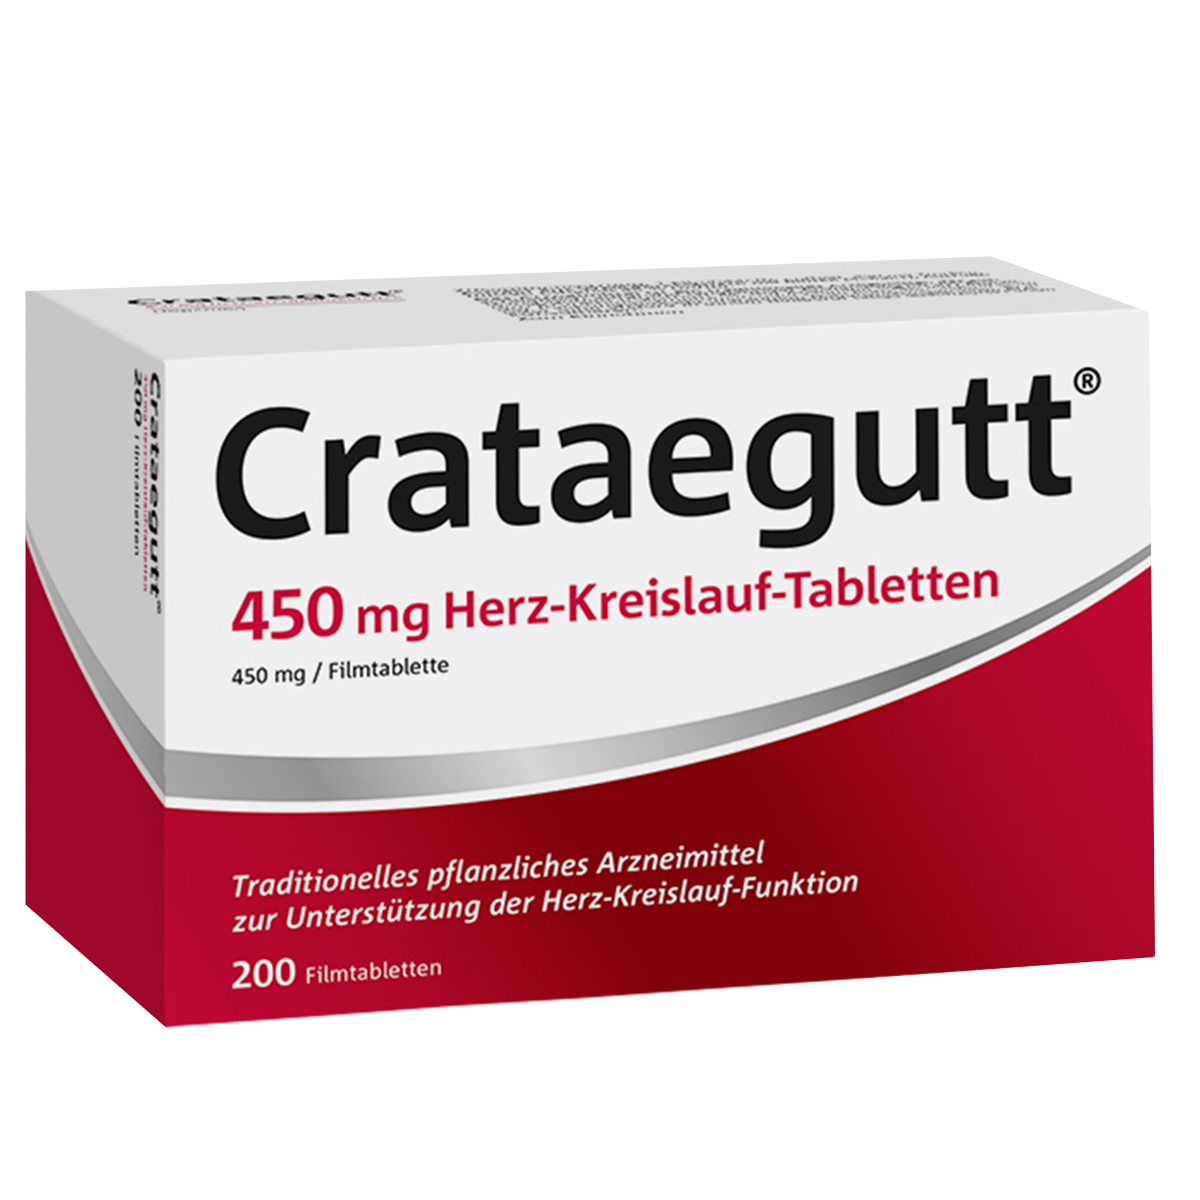 Crataegutt Herz-Kreislauf tabletten Кратегутт 450 мг, сердечные таблетки покрытые пленочной оболочкой, 200 шт.